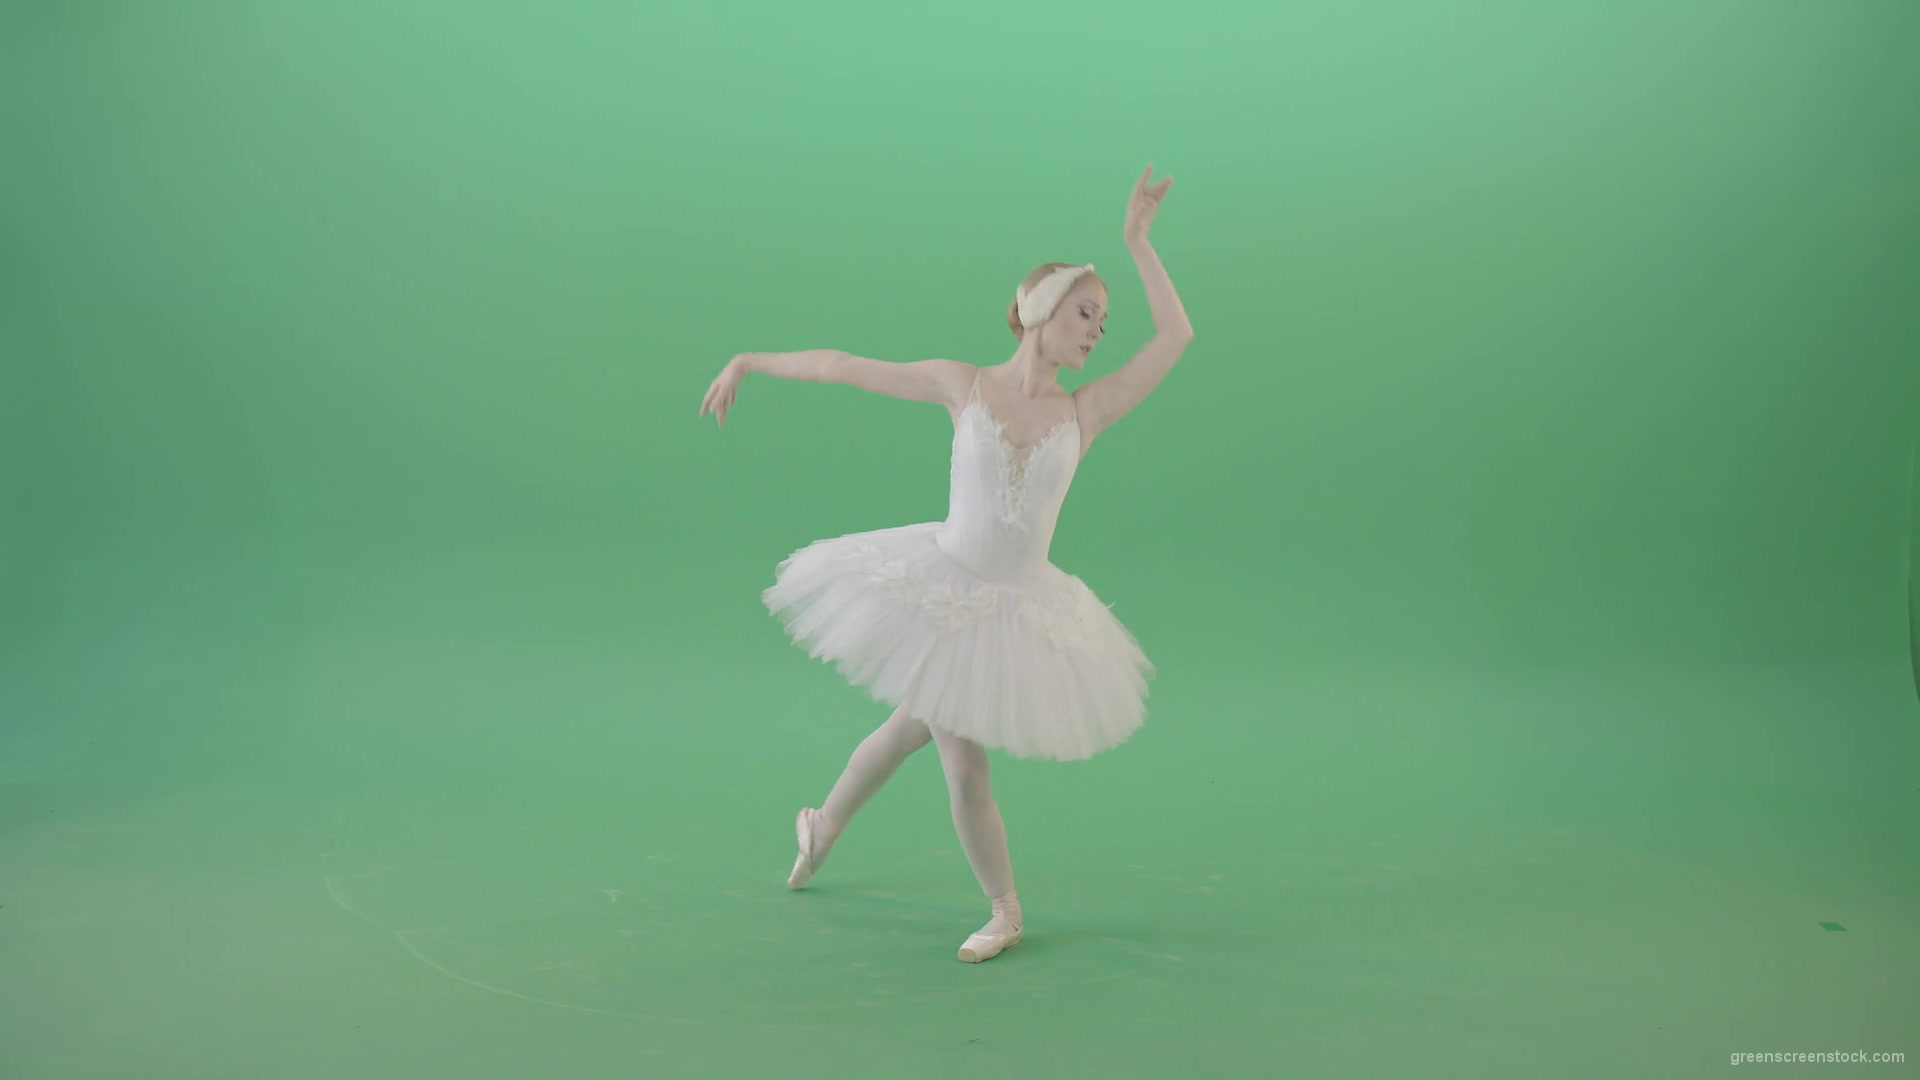 Flying-swan-laken-ballerina-dancing-with-light-on-green-screen-chroma-key-4K-Video-Footage-1920_005 Green Screen Stock